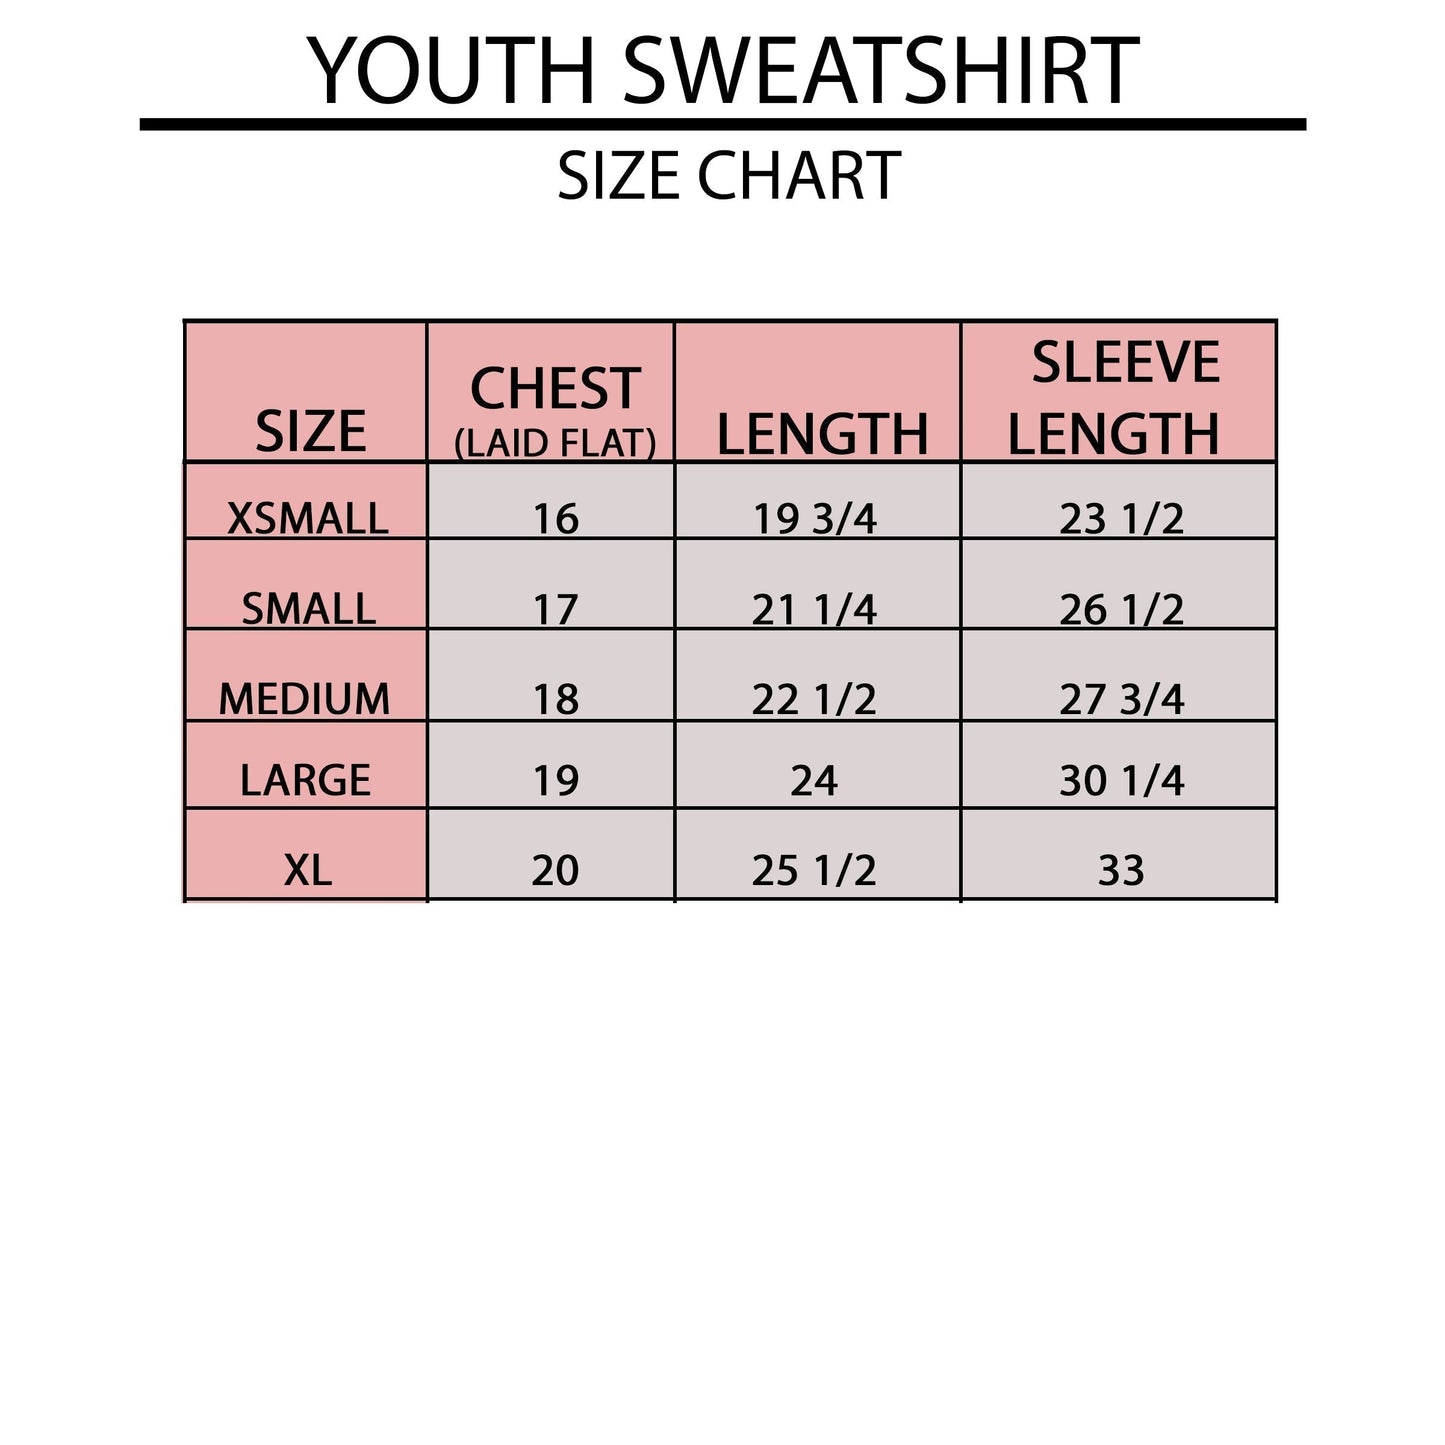 Heart Breaker Checkered Bolt | Youth Graphic Sweatshirt